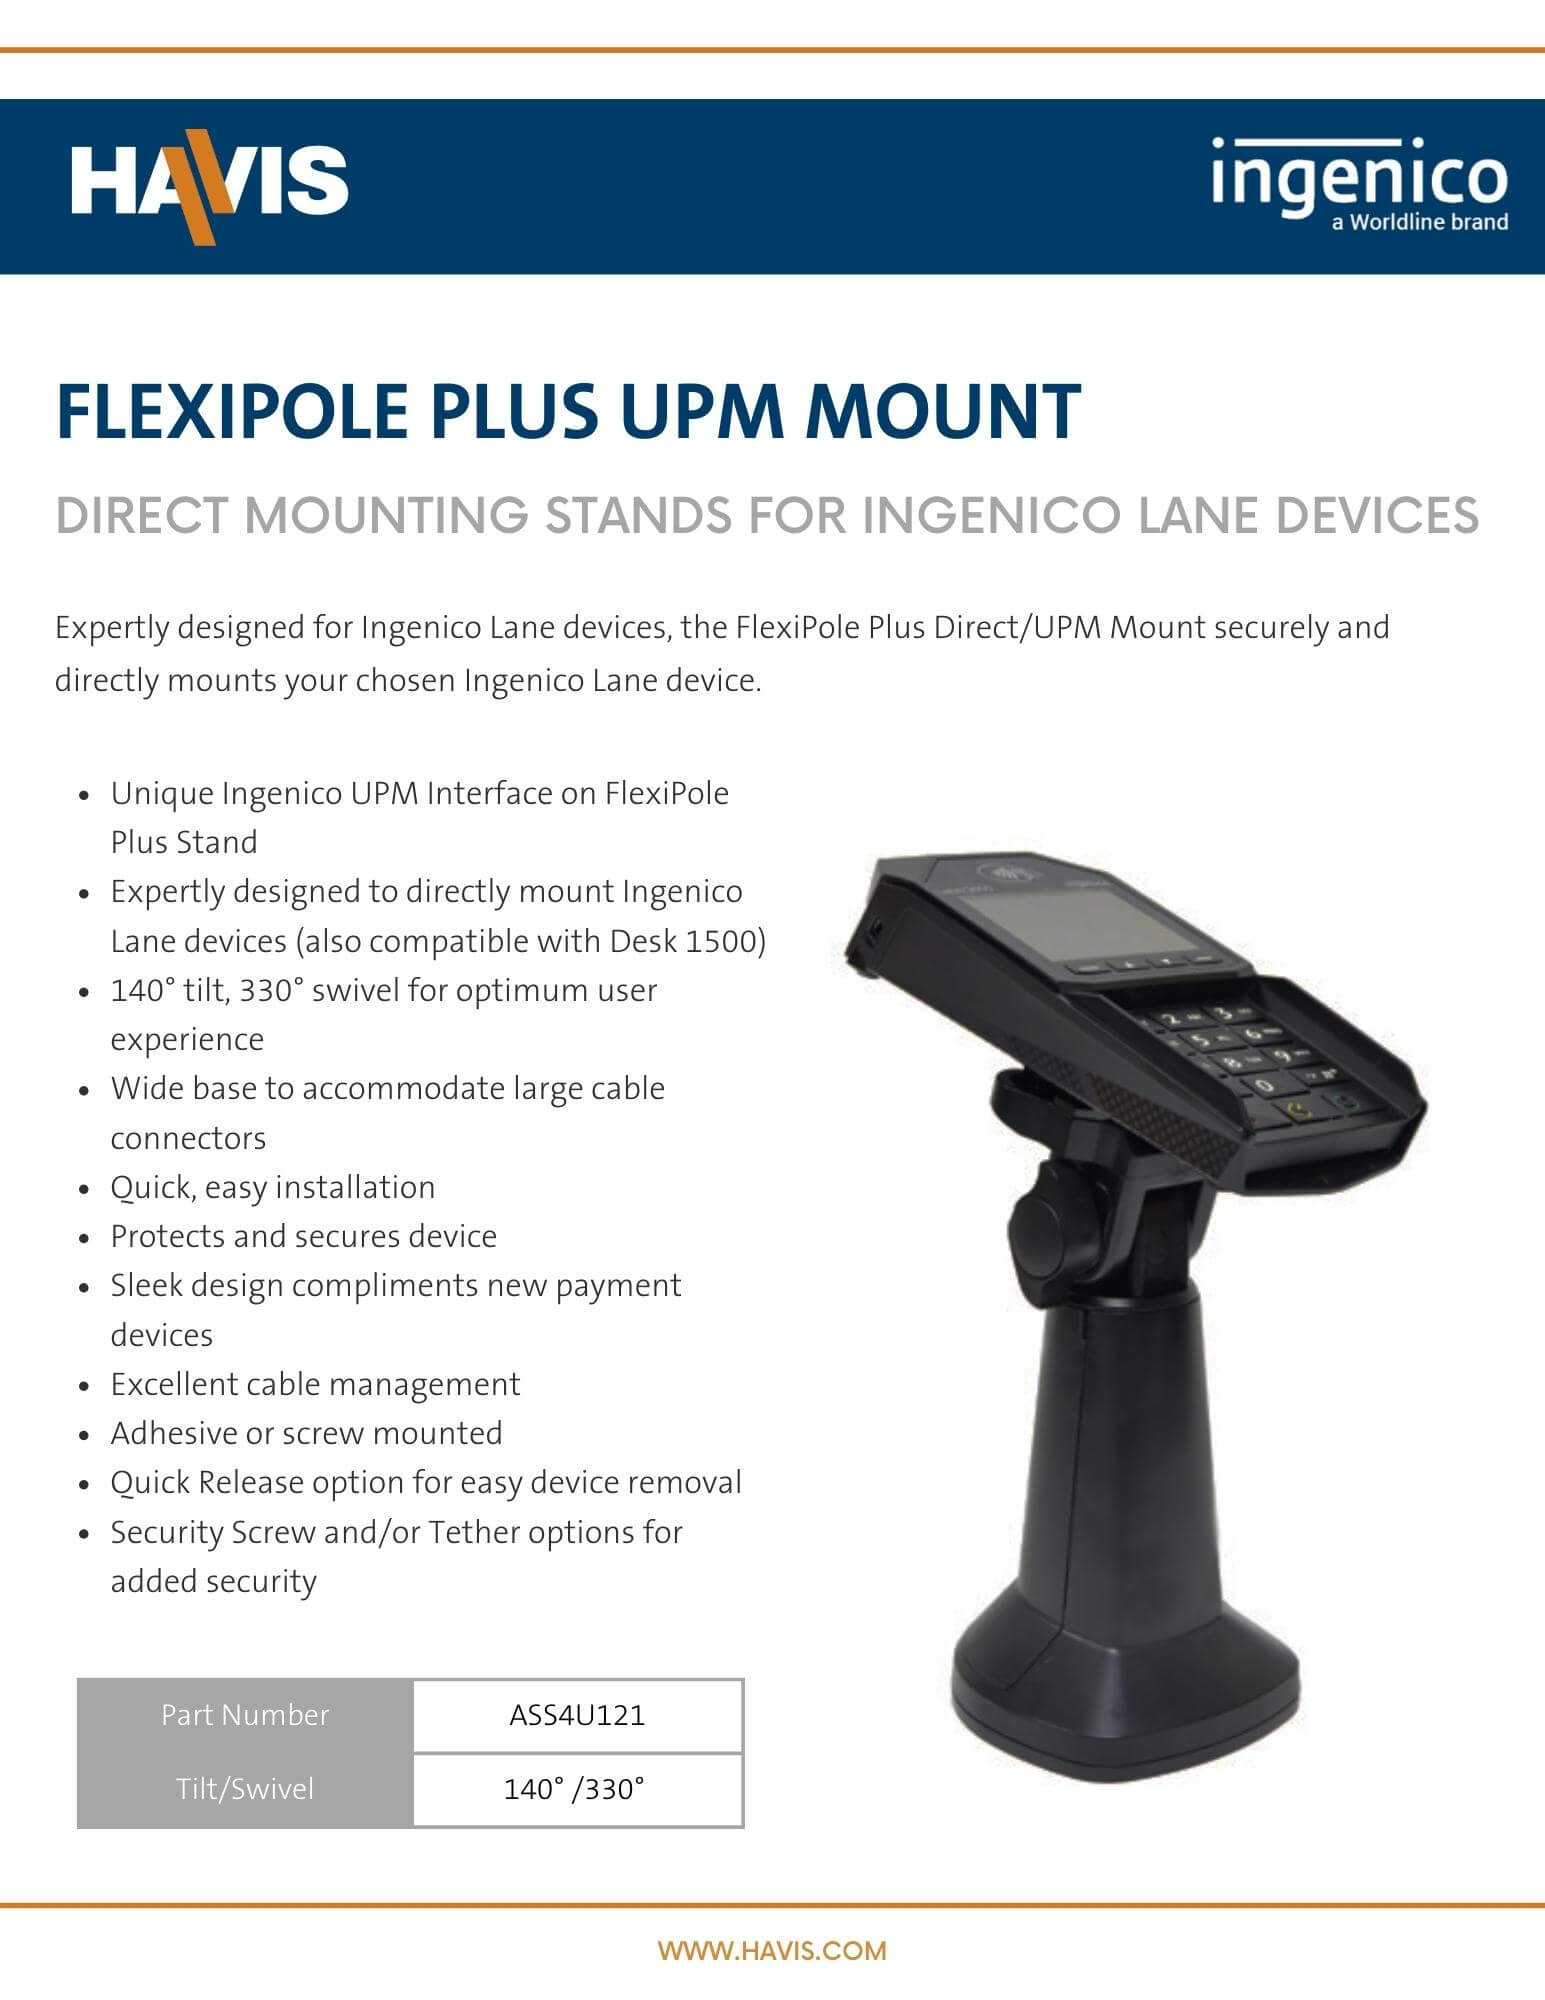 FlexiPole Plus UPM Stand for Ingenico Lane Series Datasheet